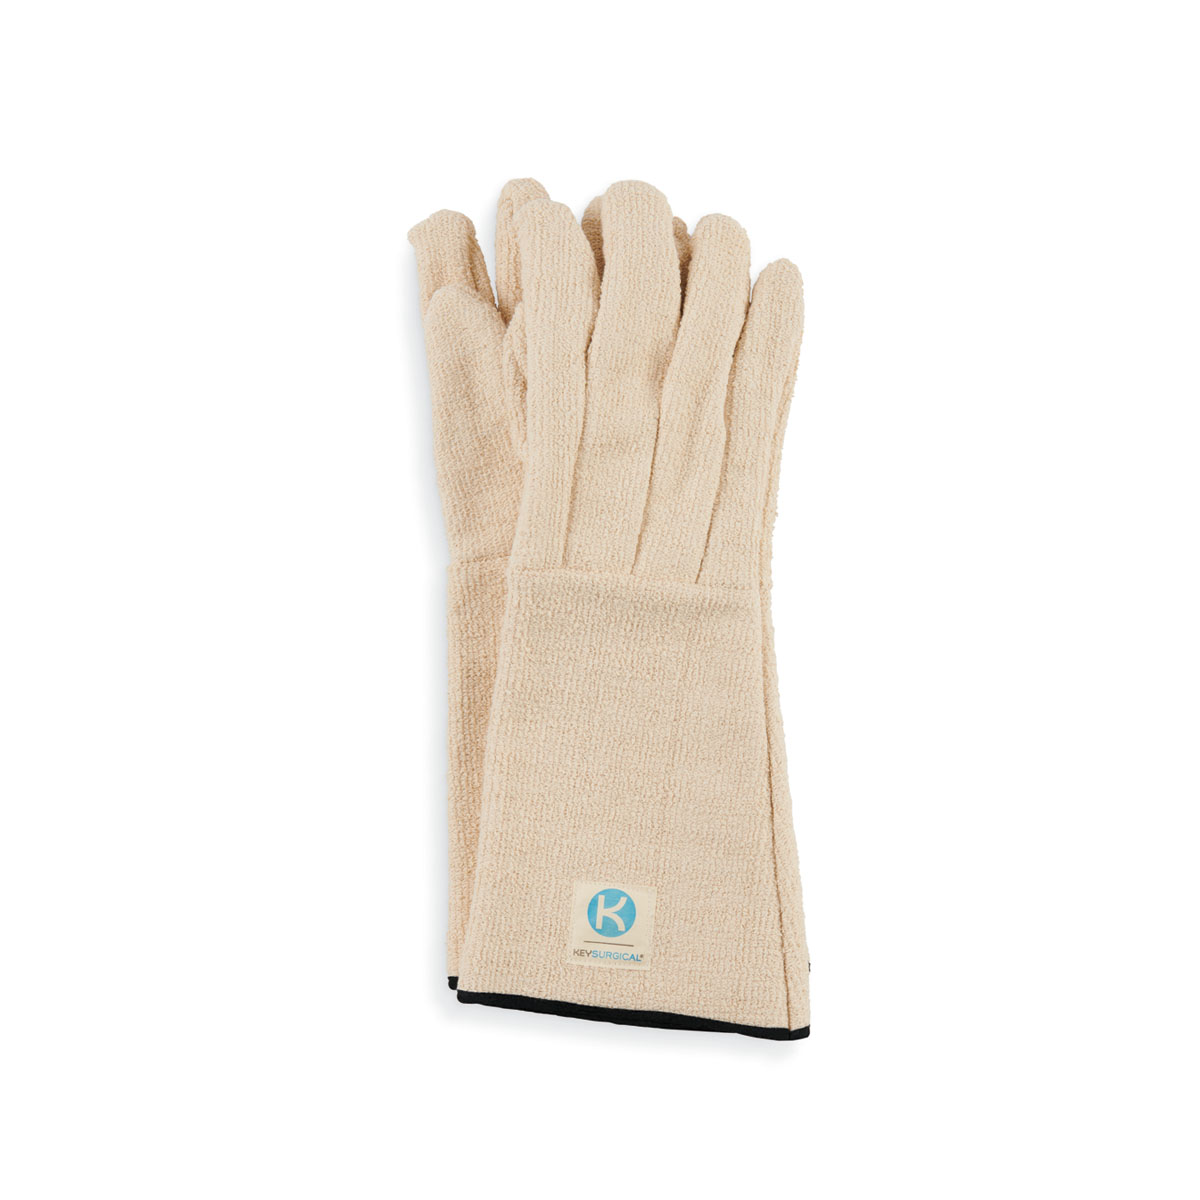 Sterilizer Gloves Image